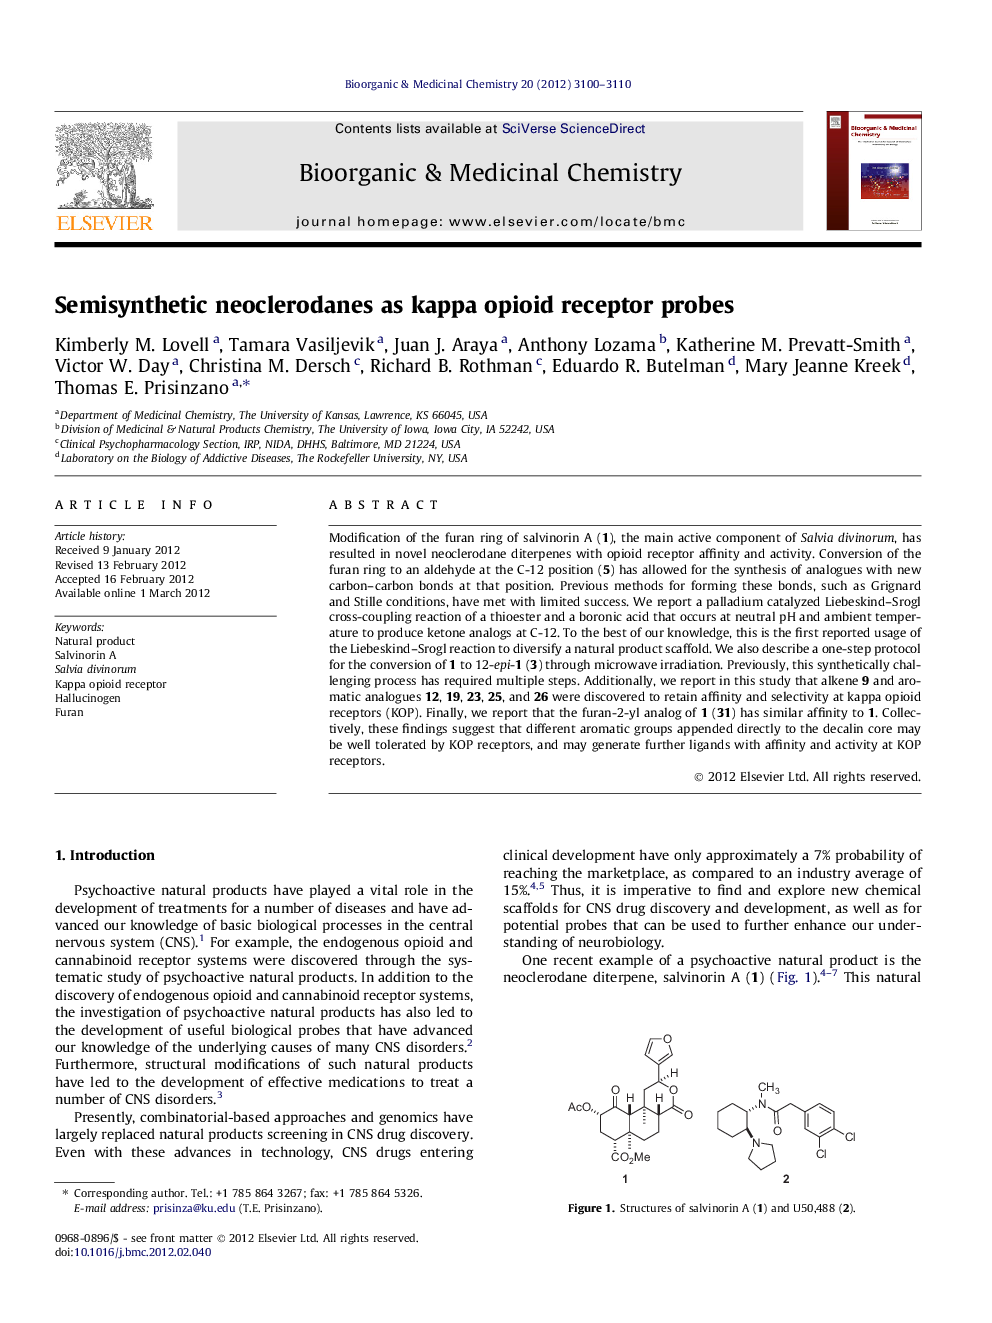 Semisynthetic neoclerodanes as kappa opioid receptor probes